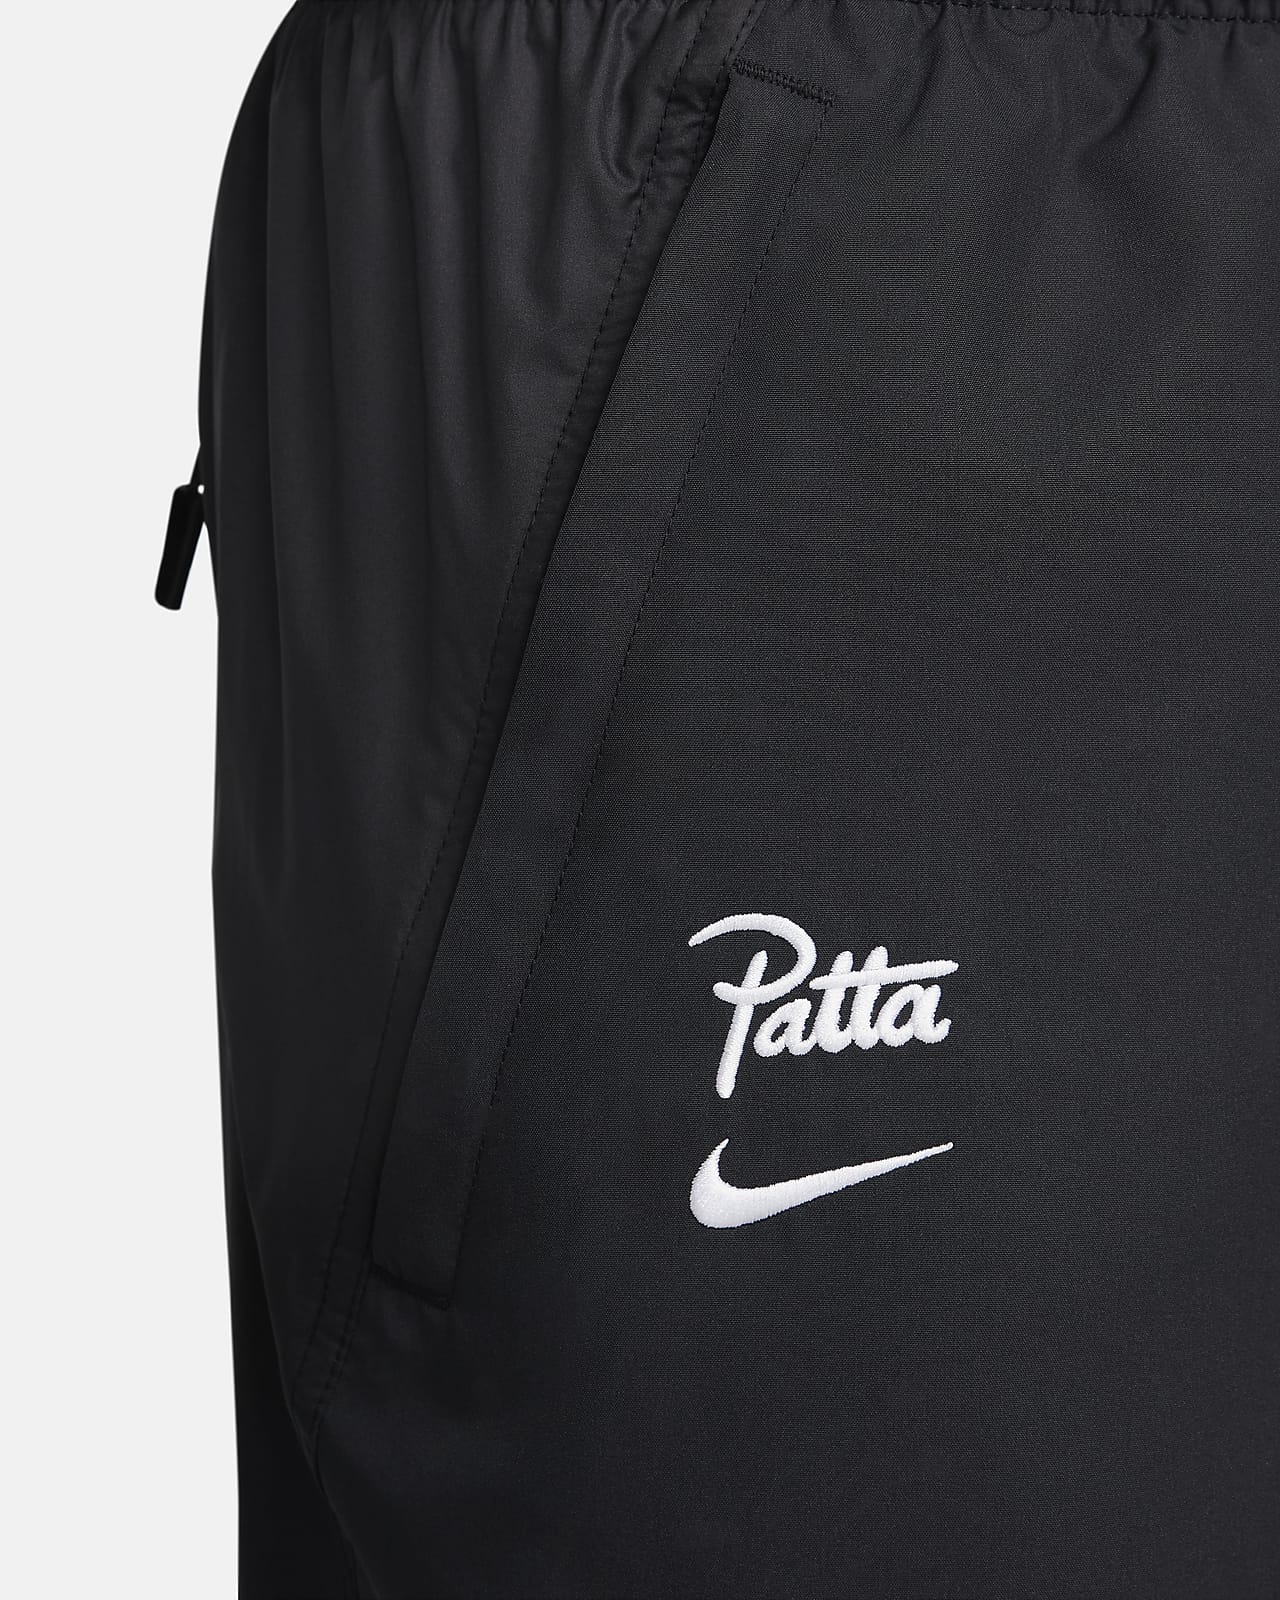 Nike パーカー バルセロナ パタ Patta エアマックス ジョーダン新品Mサイズ